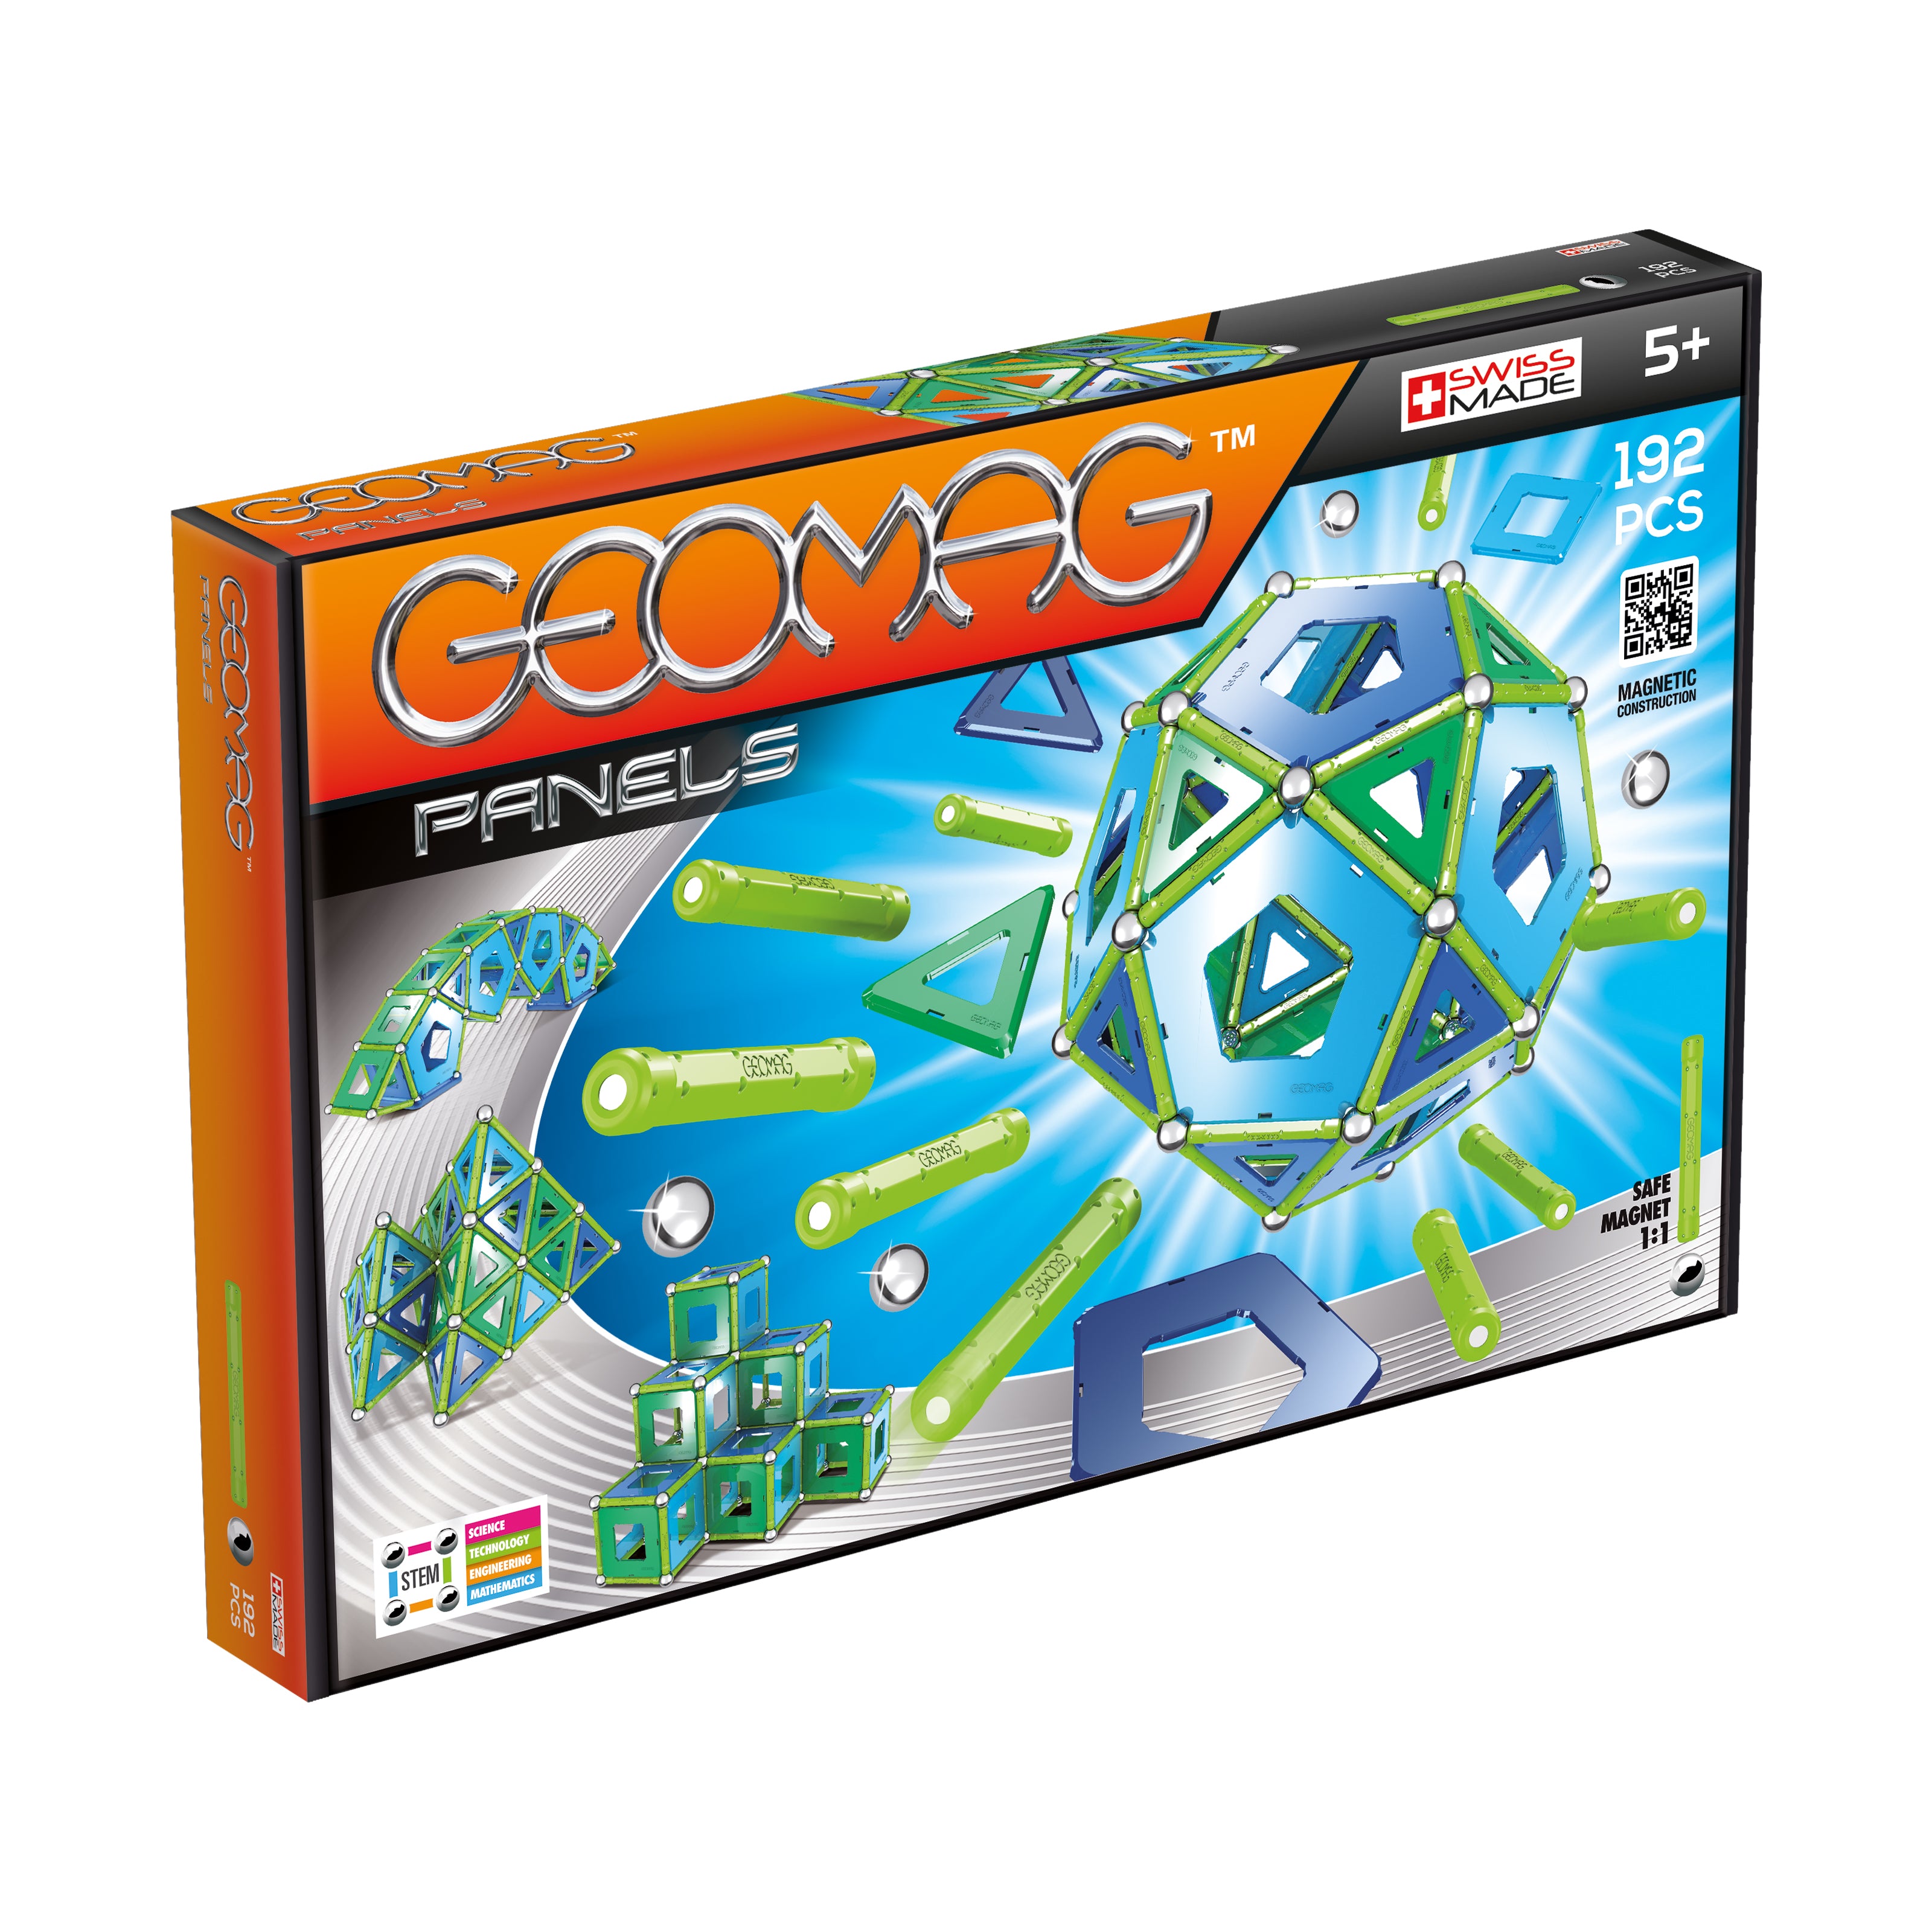 Geomag Panels: 192 Pcs, Educational Game